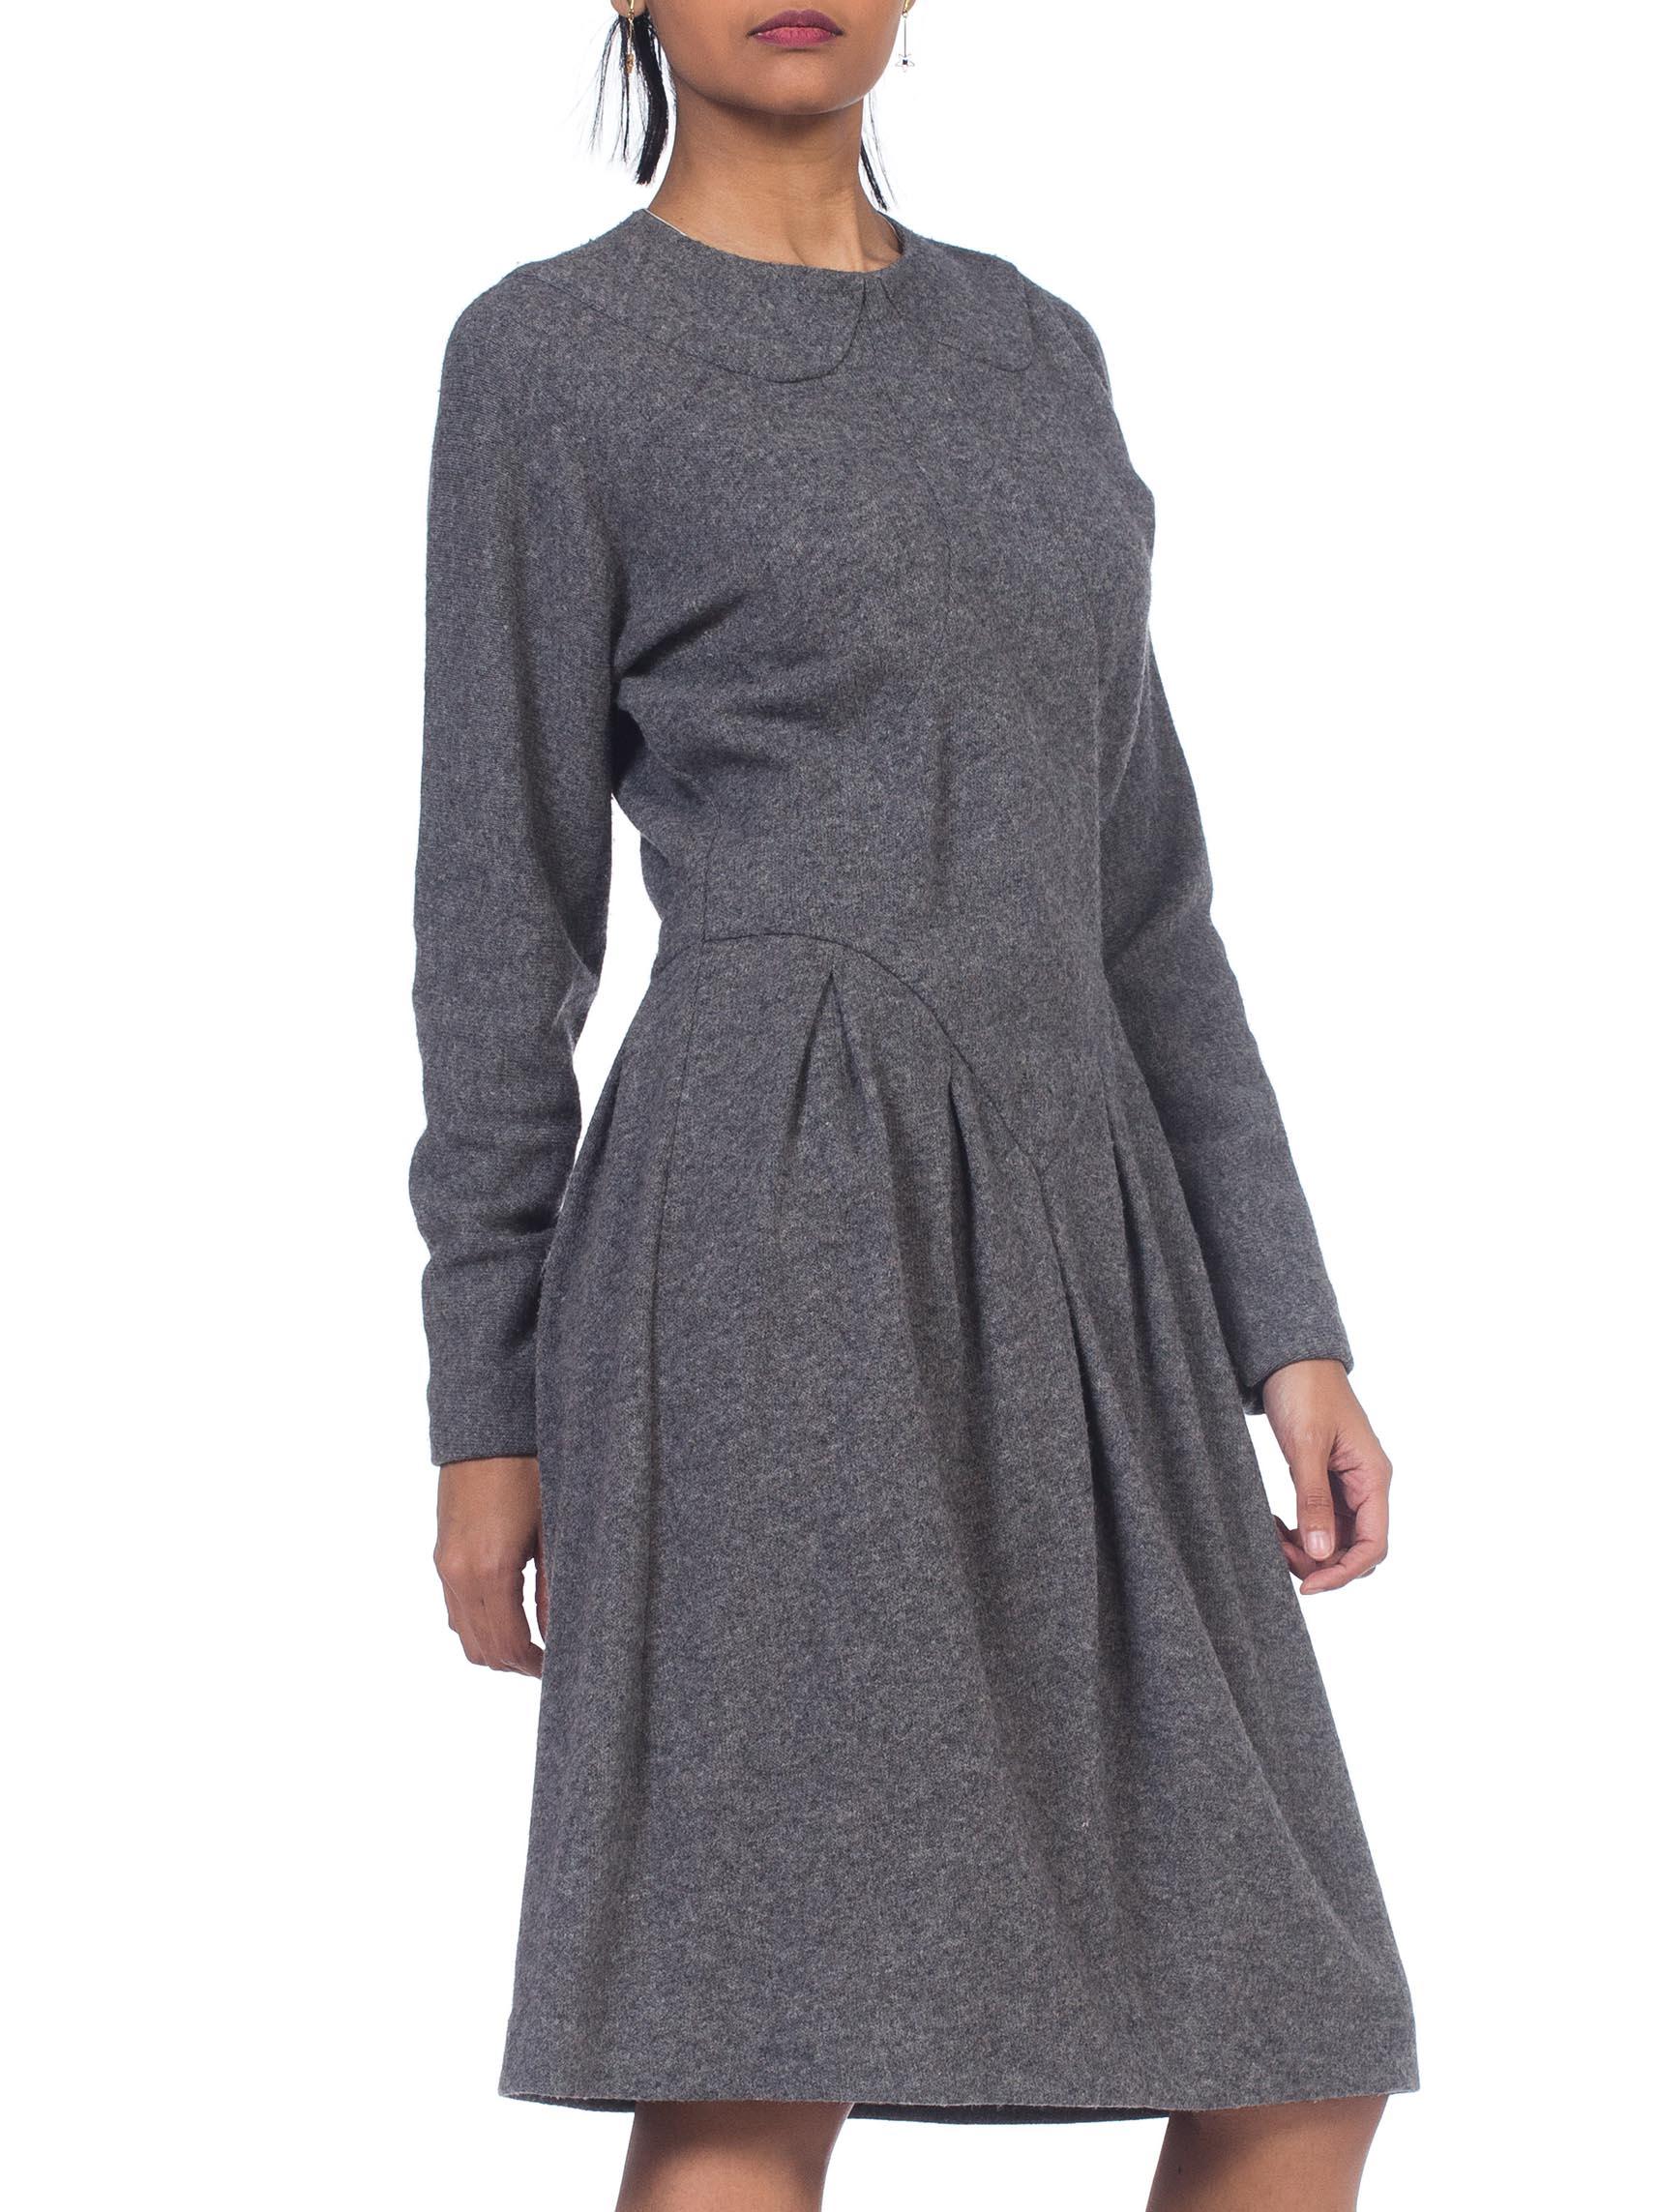 Women's 1980S GEOFFREY BEENE Grey Wool Knit Long Sleeve Sweater Dress With Partial Silk For Sale